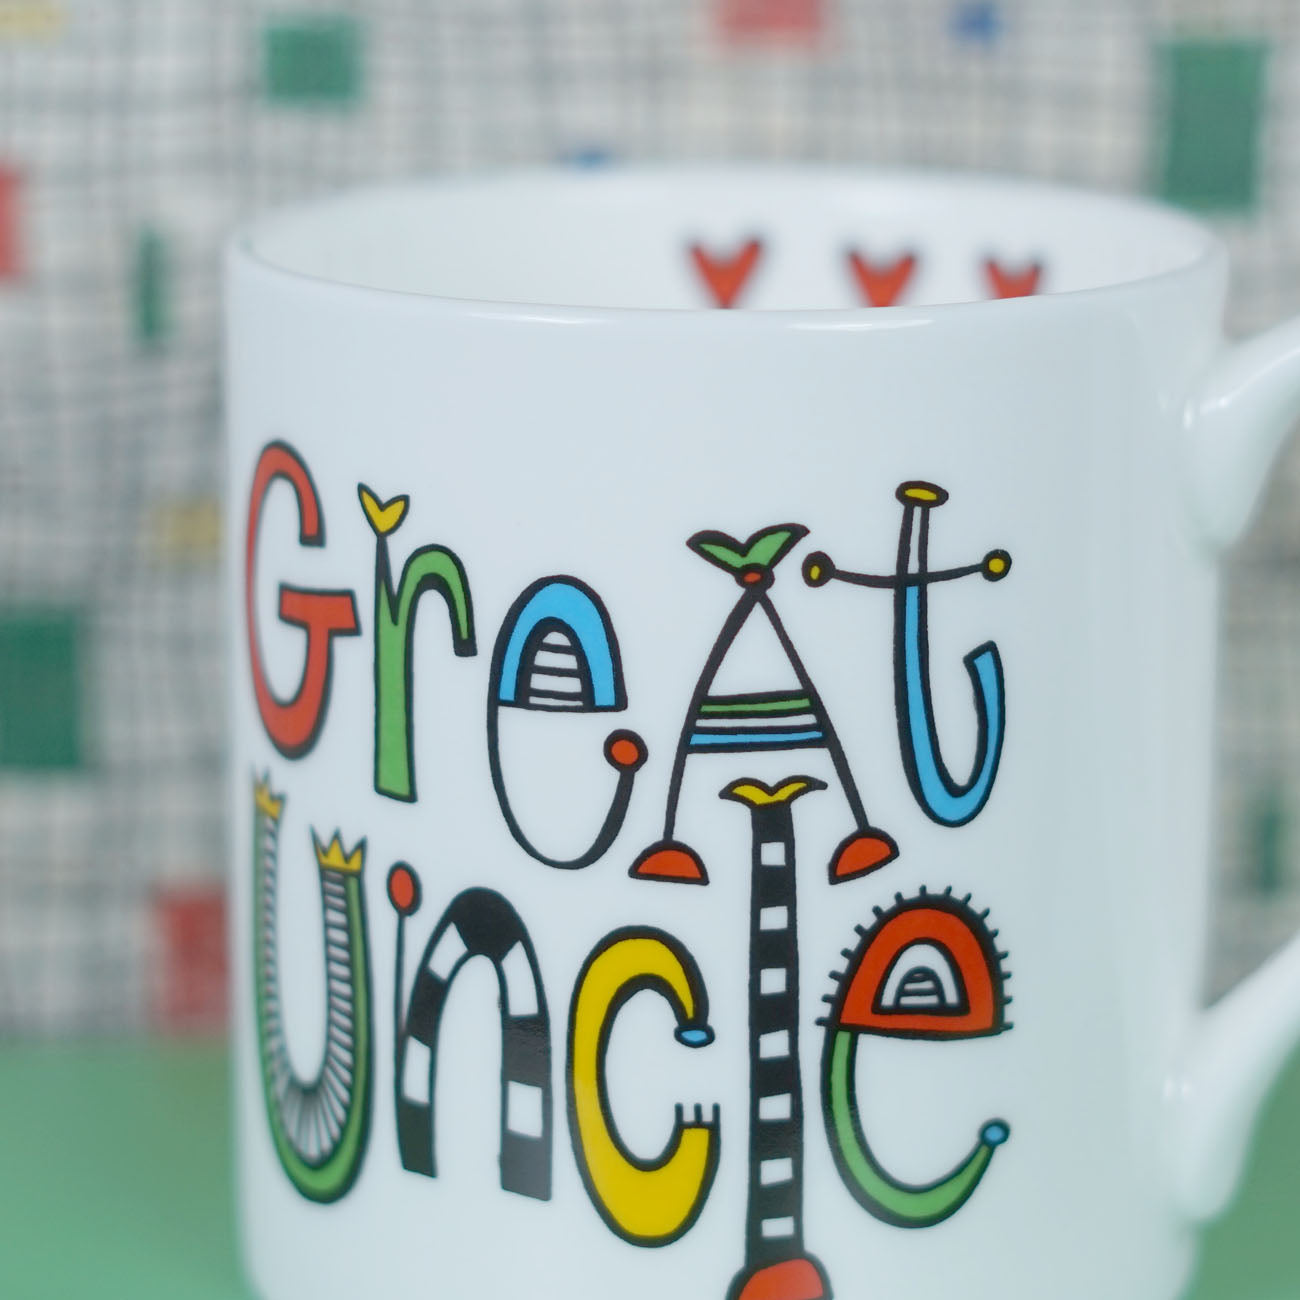 Personalised Great Uncle Mug